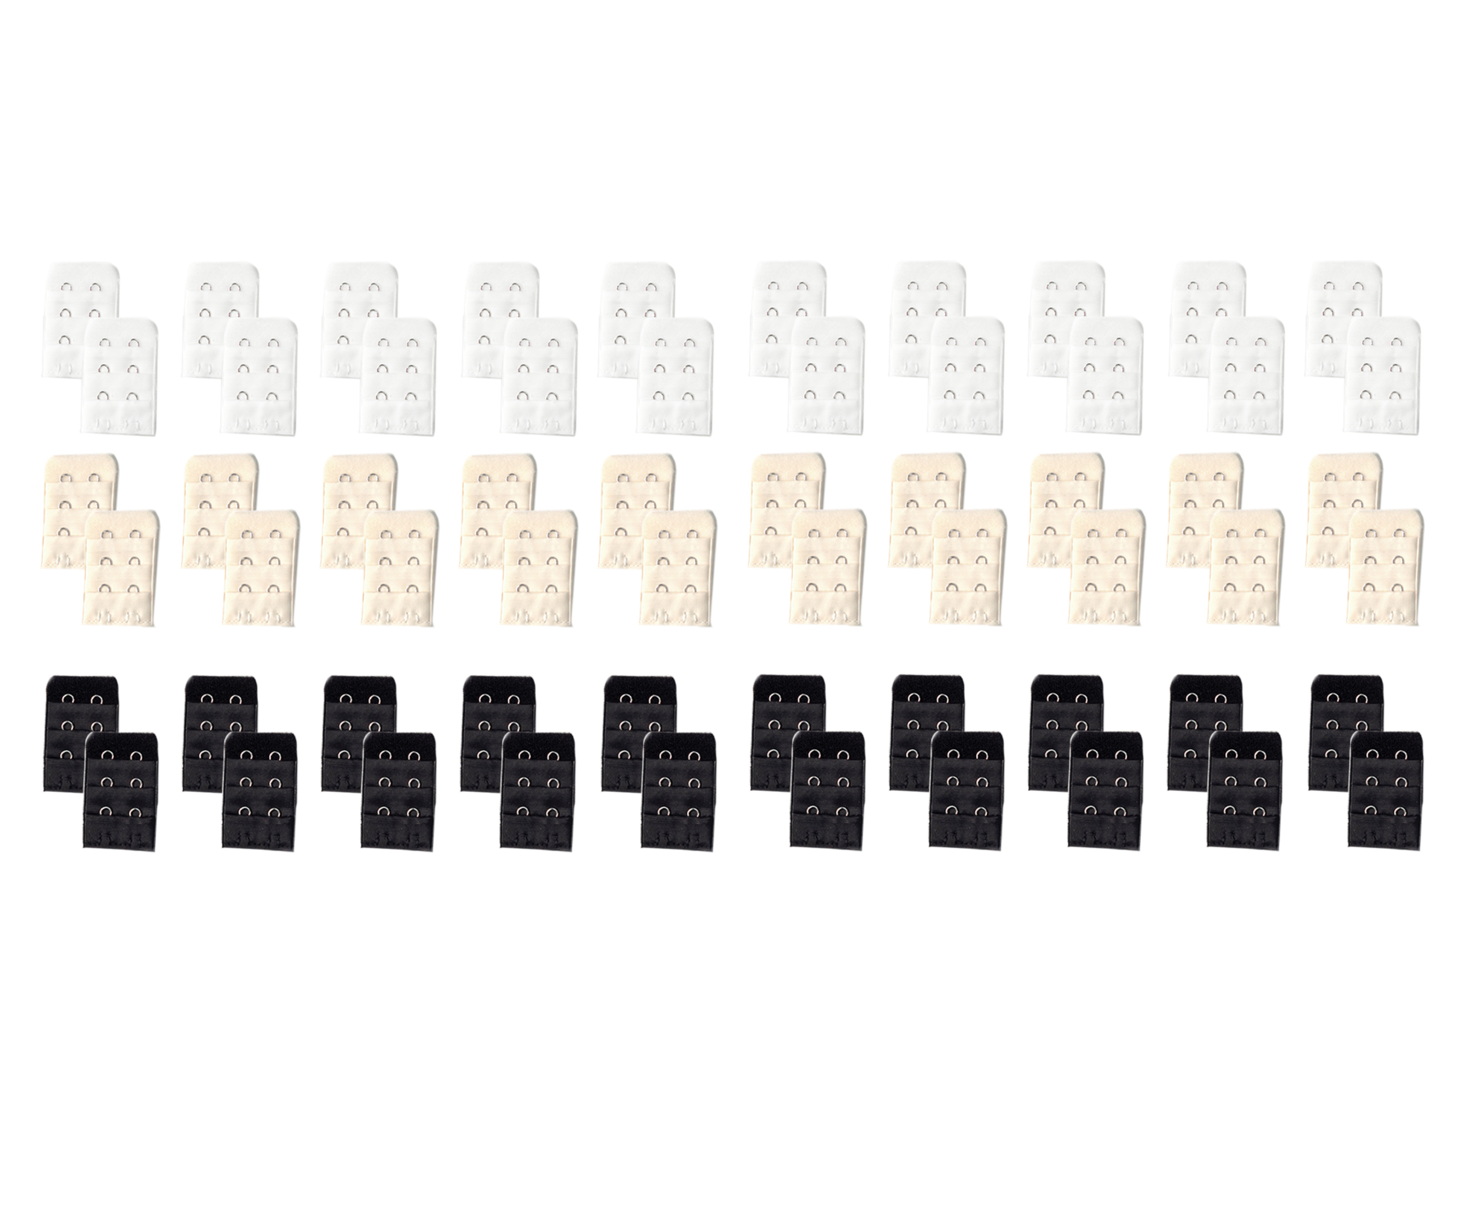 Two-Hook Bra Band Extender 60-Pack in Black, White, Beige (20 per Color)